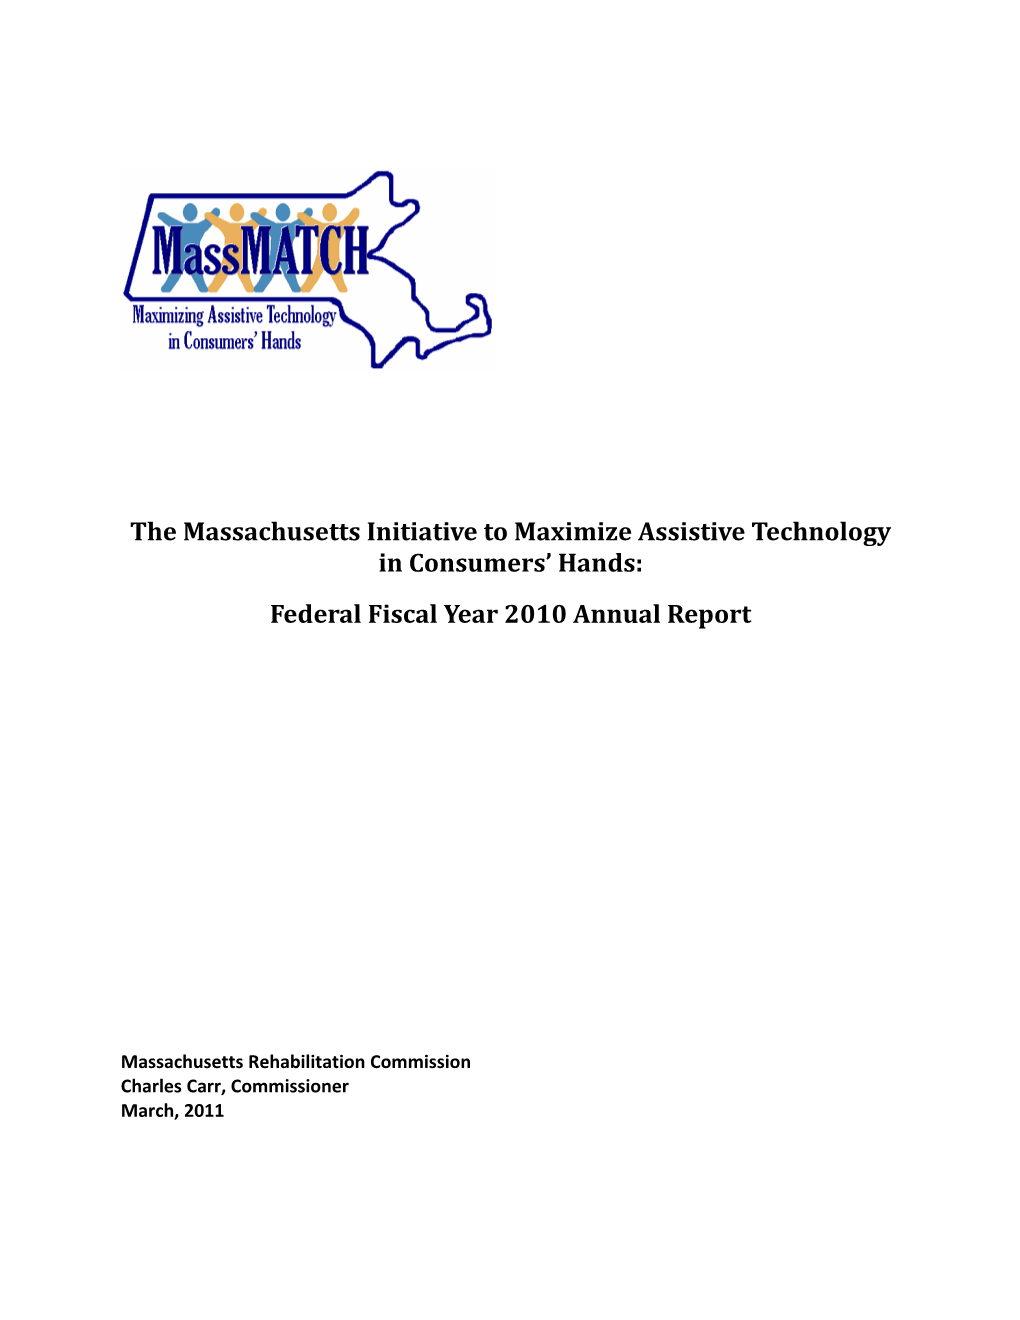 Massmatch FFY08 Annual Report